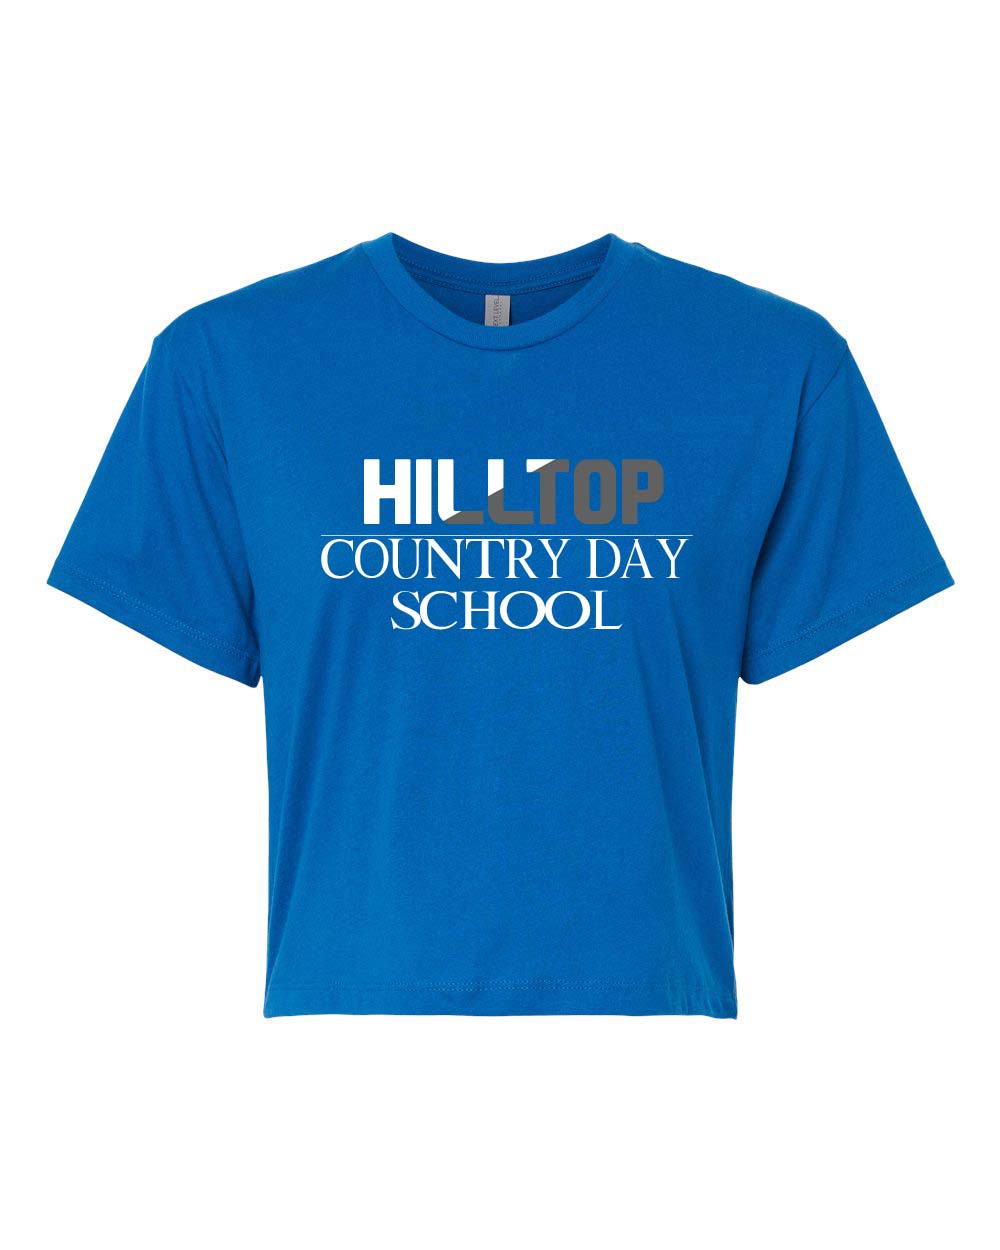 Hilltop Country Day School Design 4 crop top